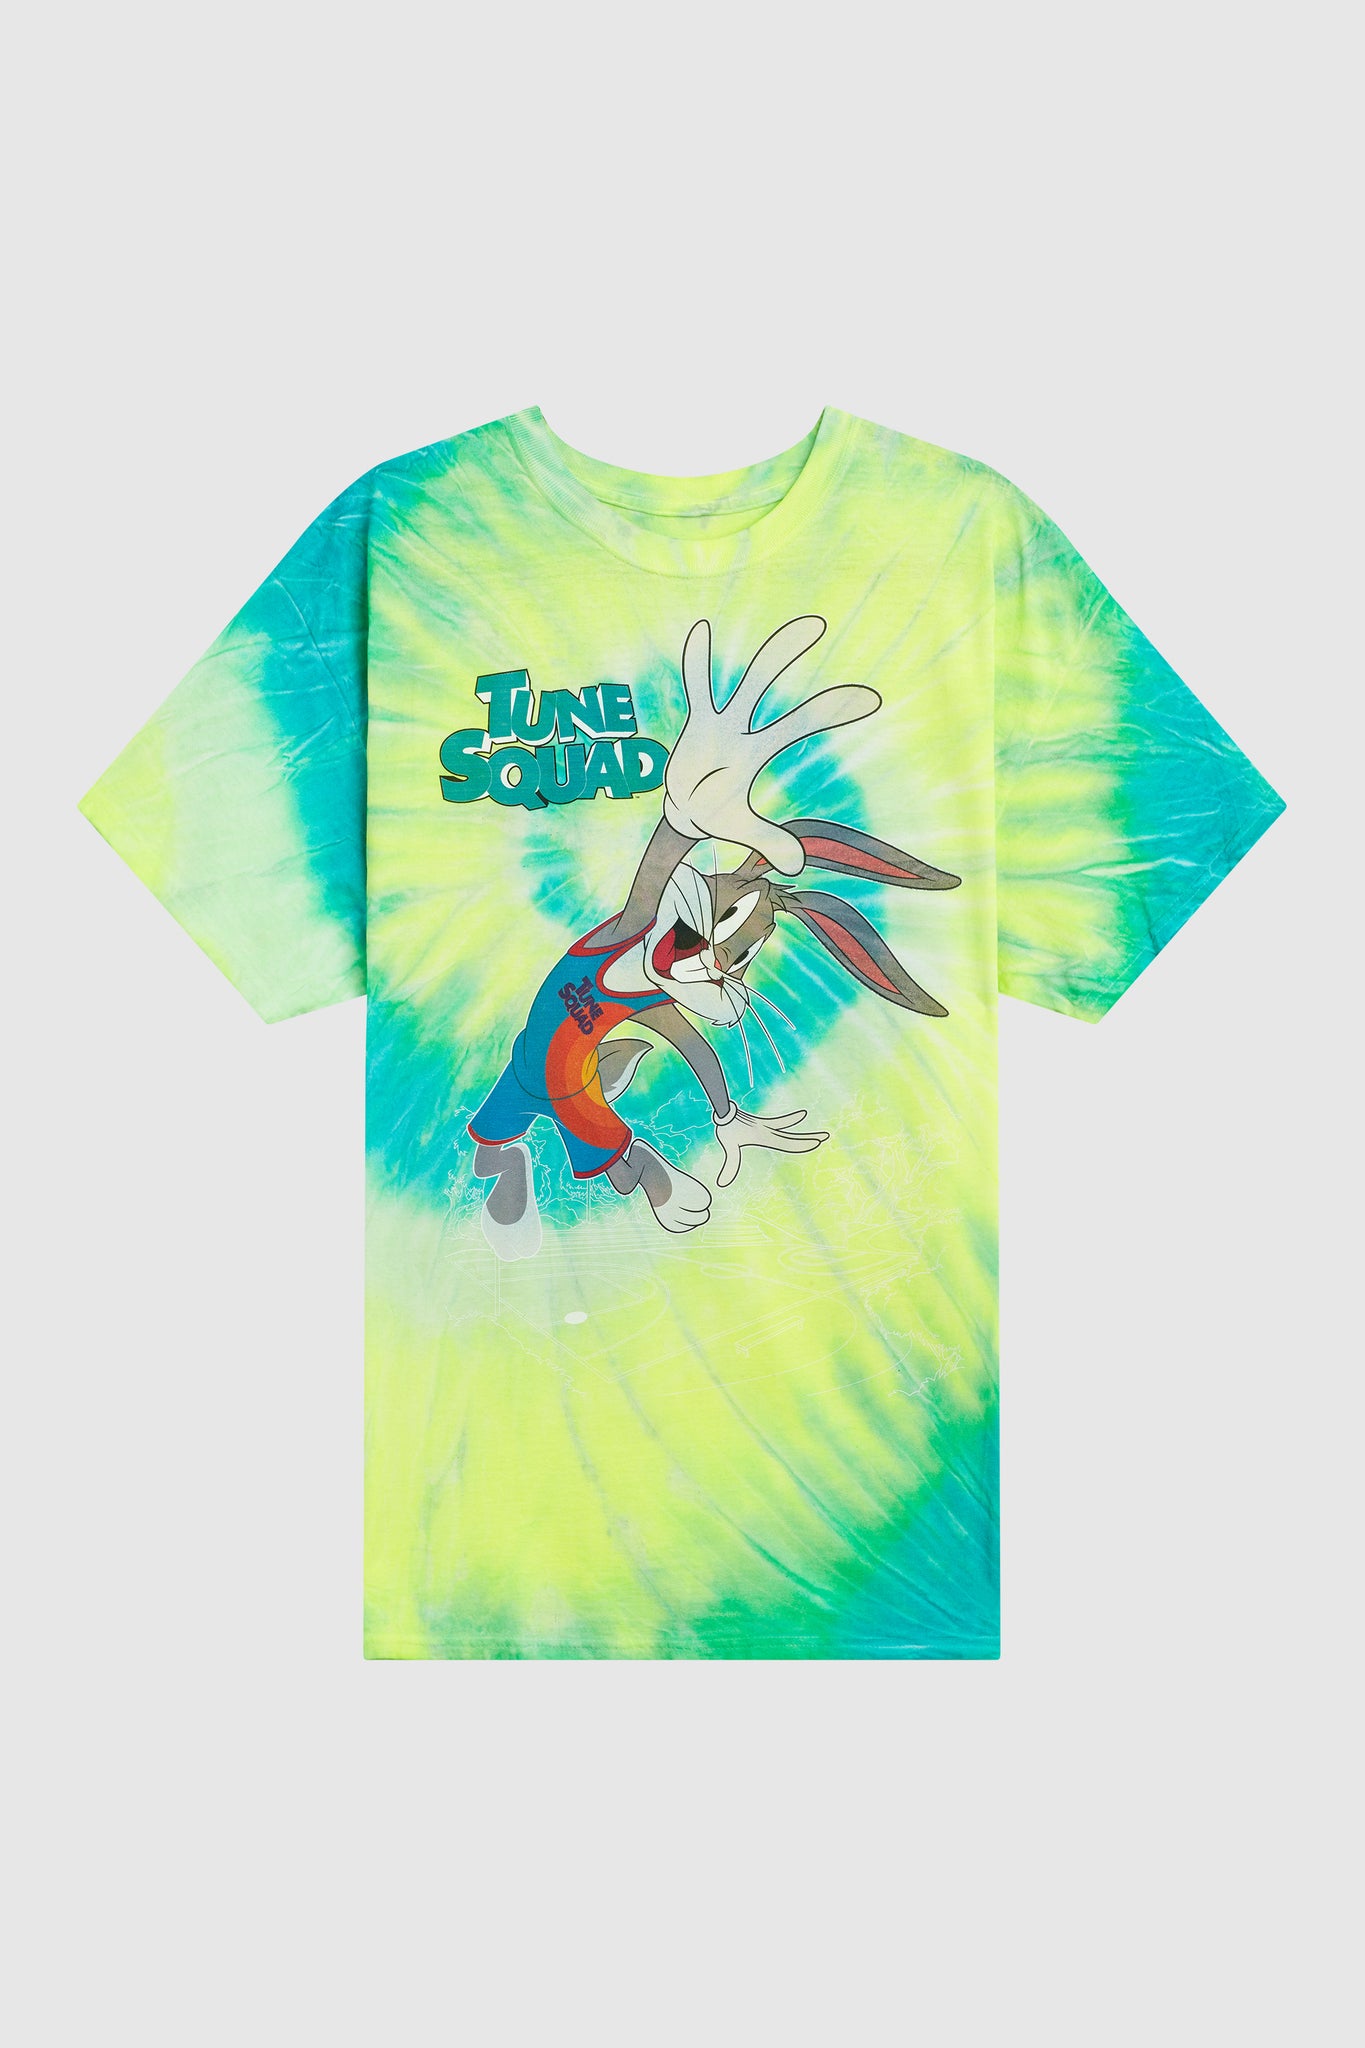 Dim Mak x Space Jam: A New Legacy - Bugs Bunny Tshirt - Starfruit Spiral Tie Dye